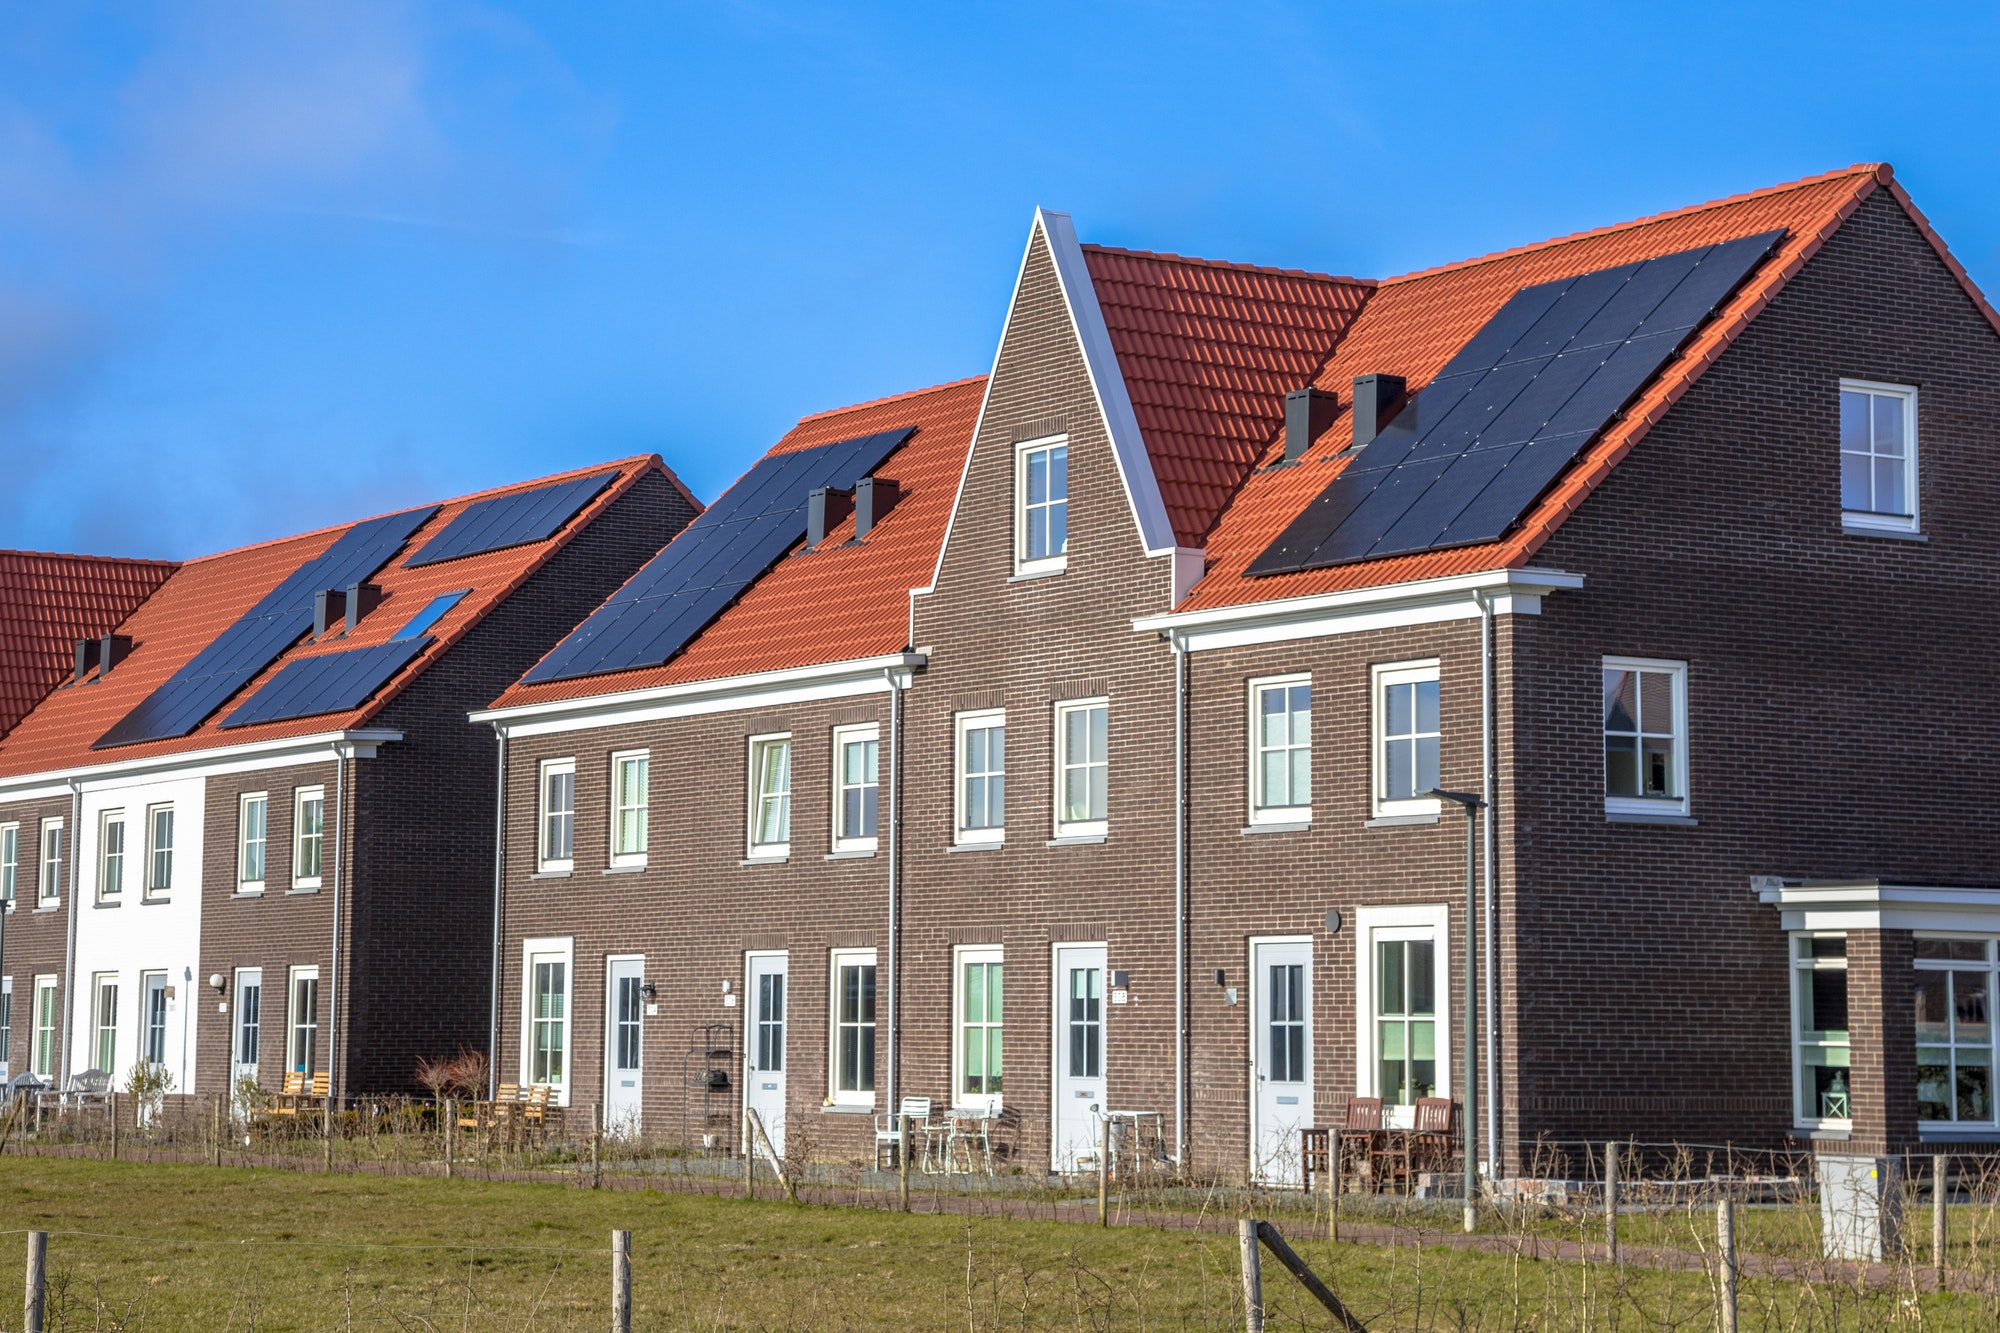 Modern row houses with solar panels on sunny day